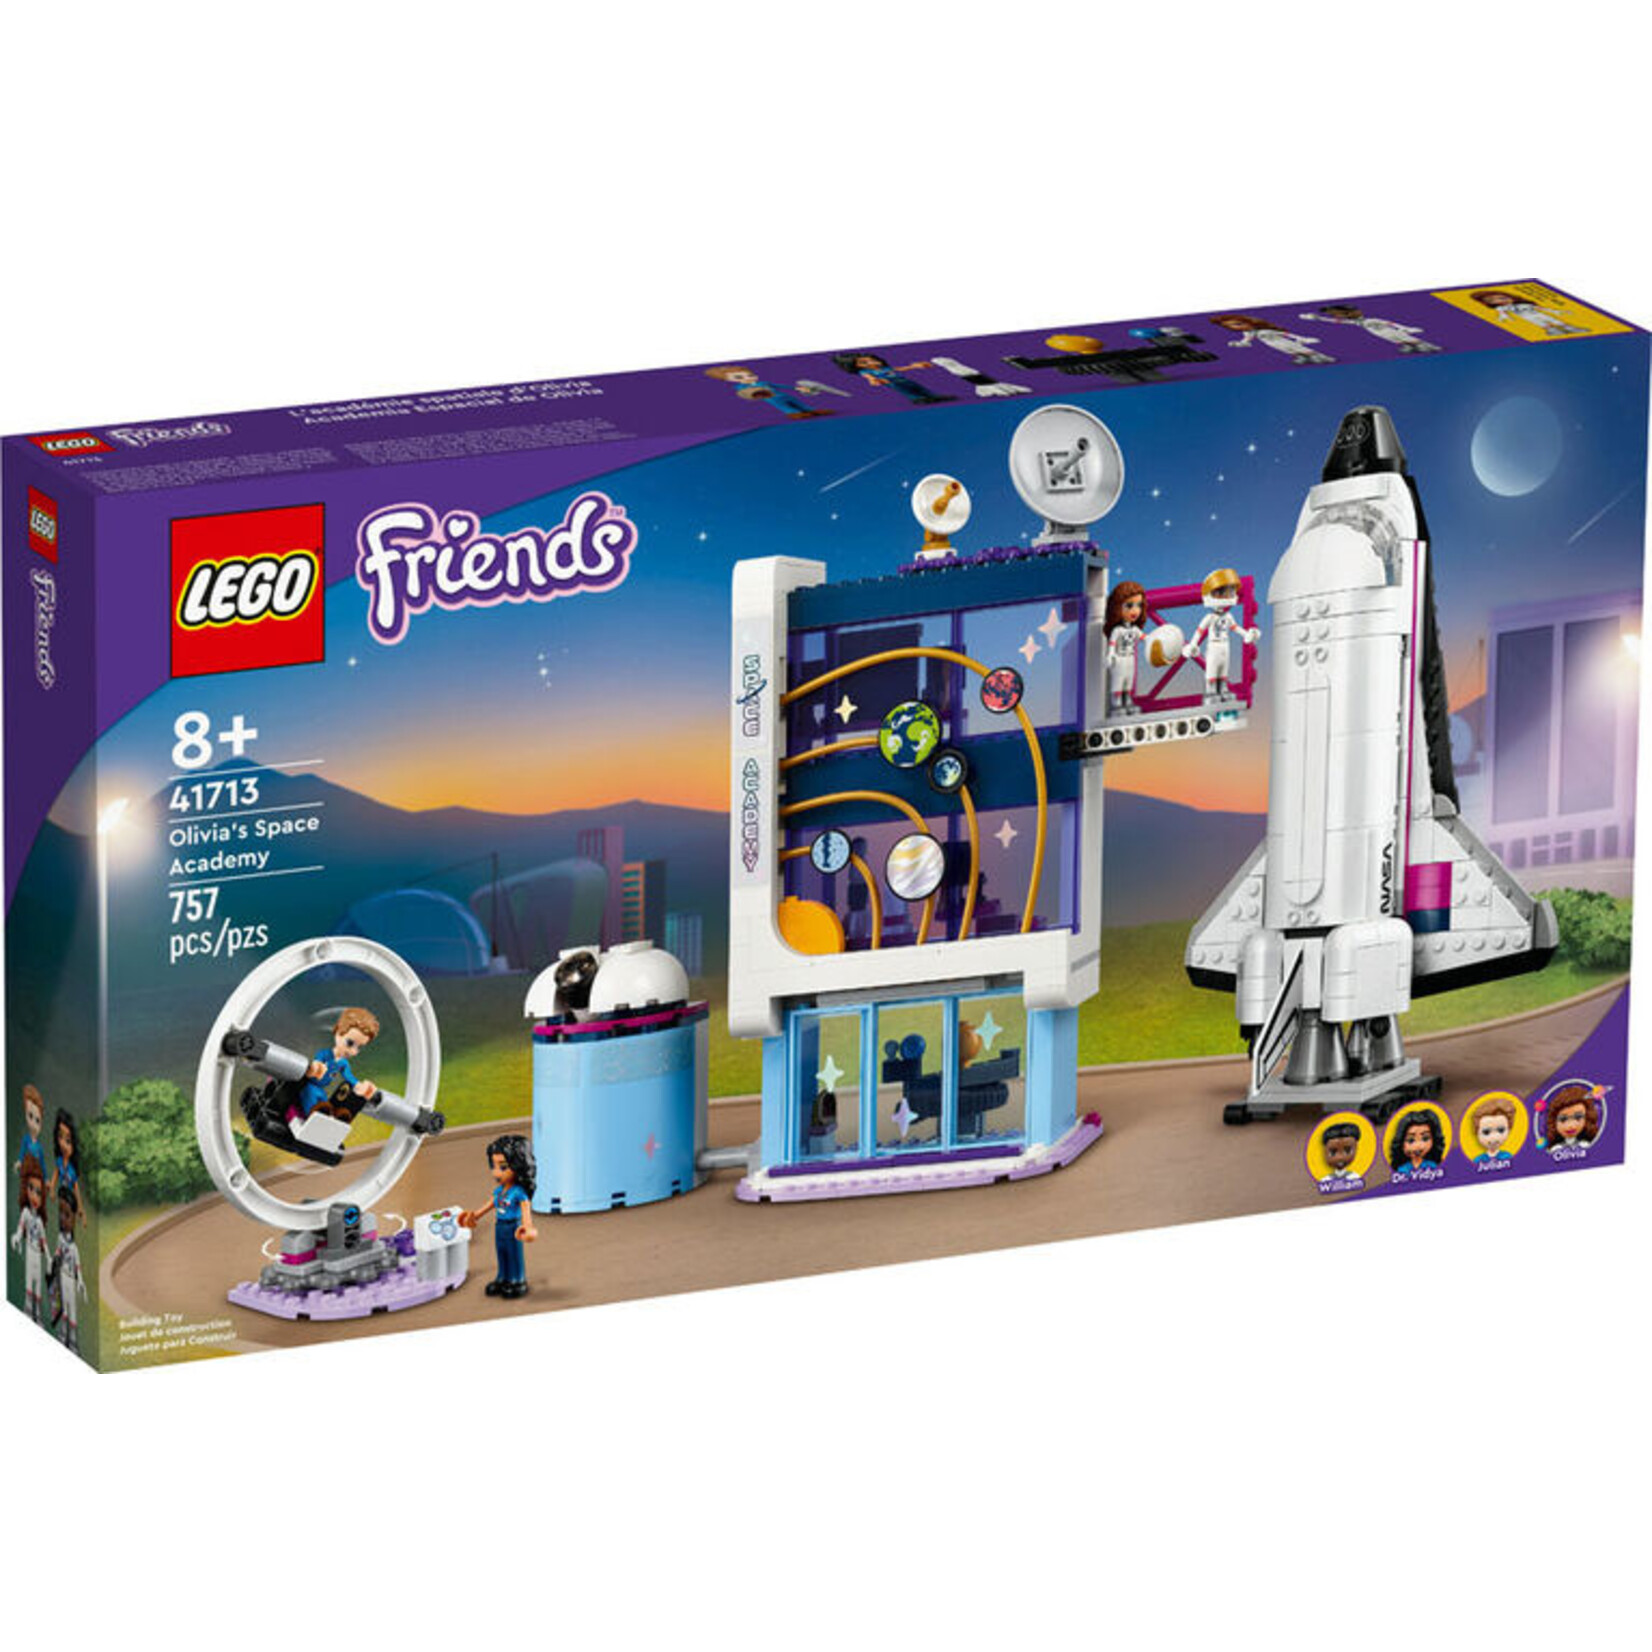 LEGO Friends - olivia's space academy